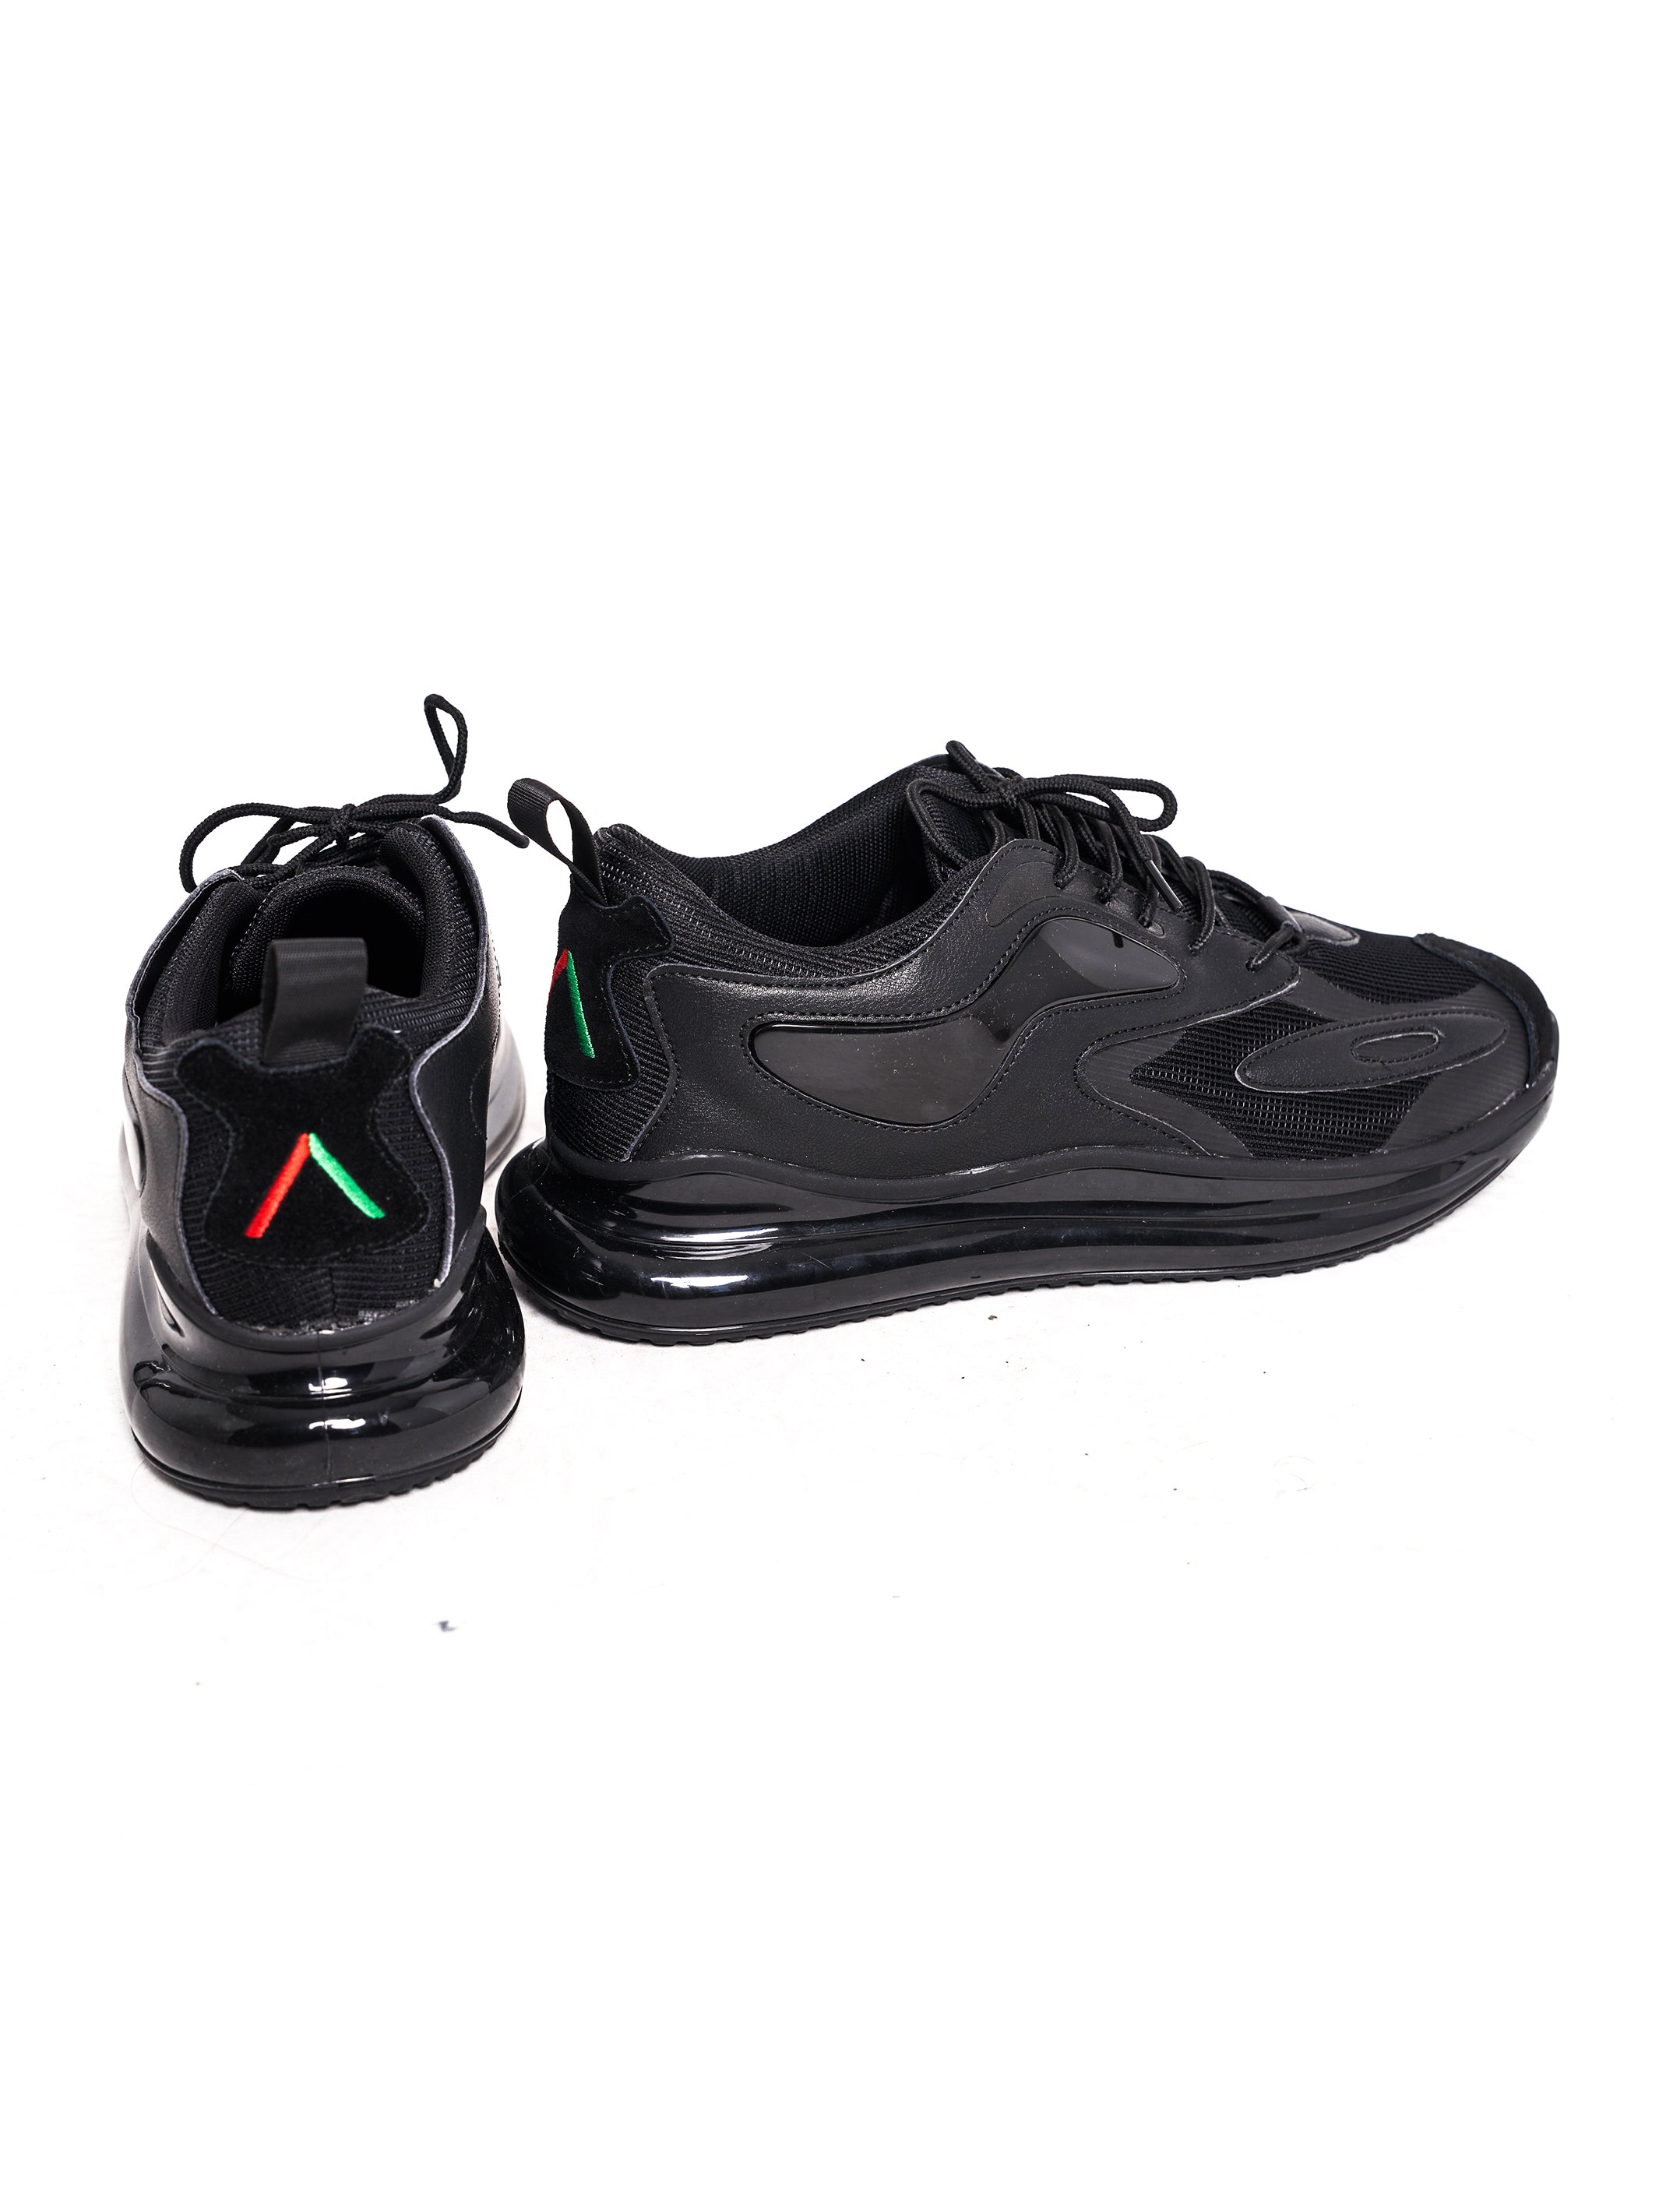 Actively Black Athleisure Shoe 2.0